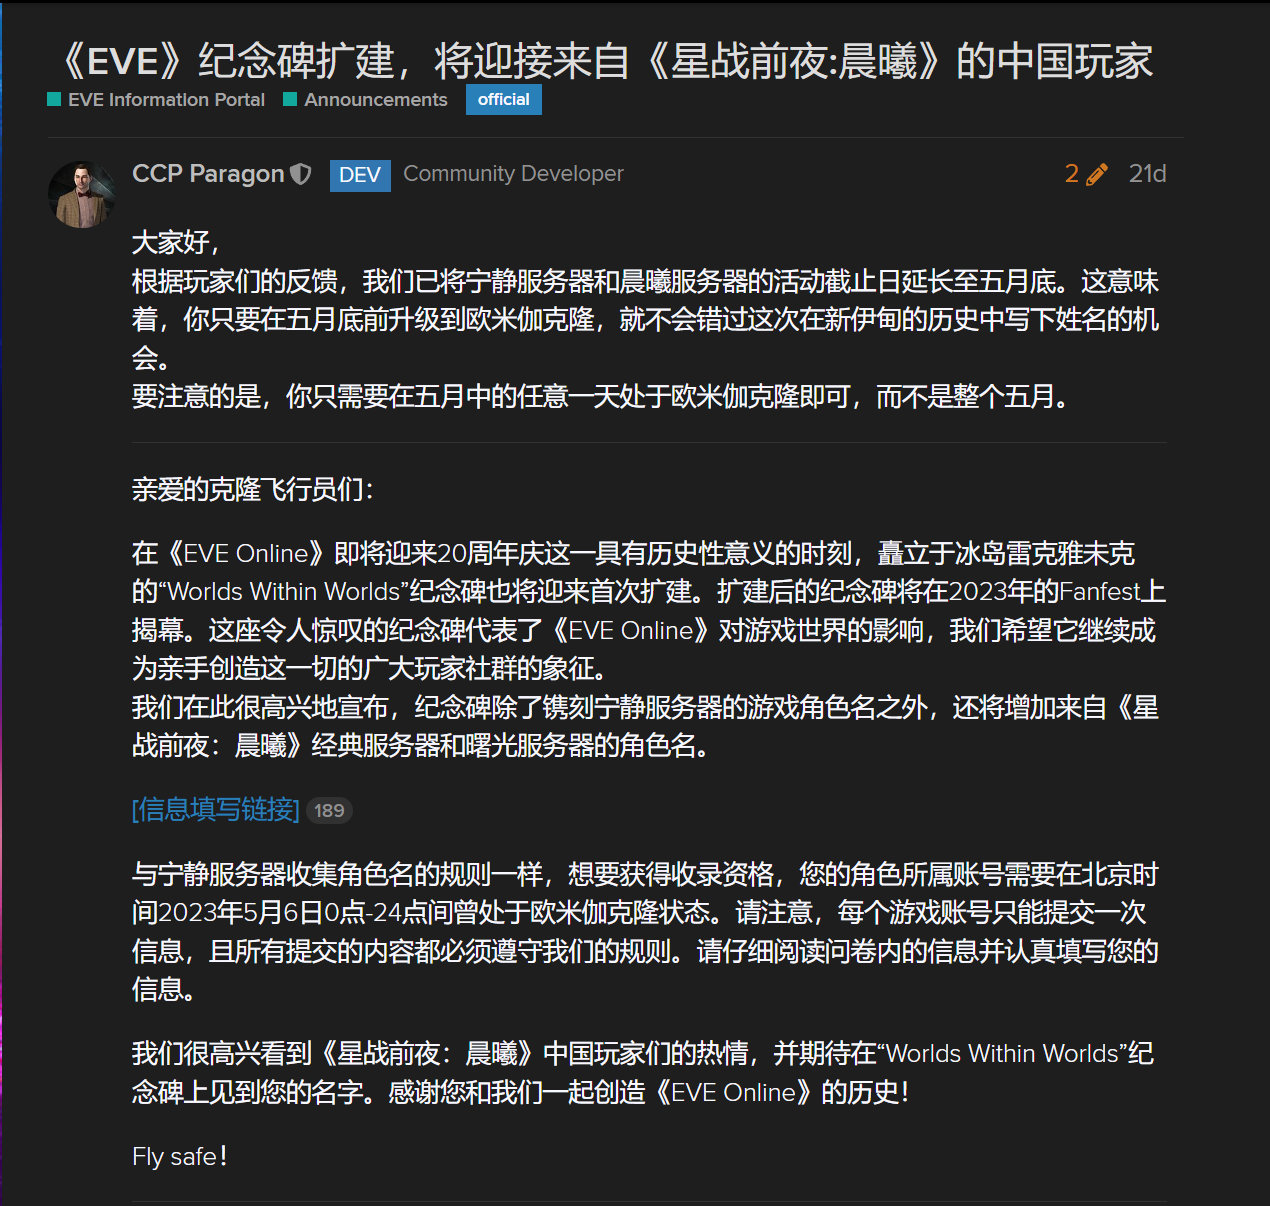 【EVE Ol】纪念碑扩建，角色名登记时间延长至6月10日